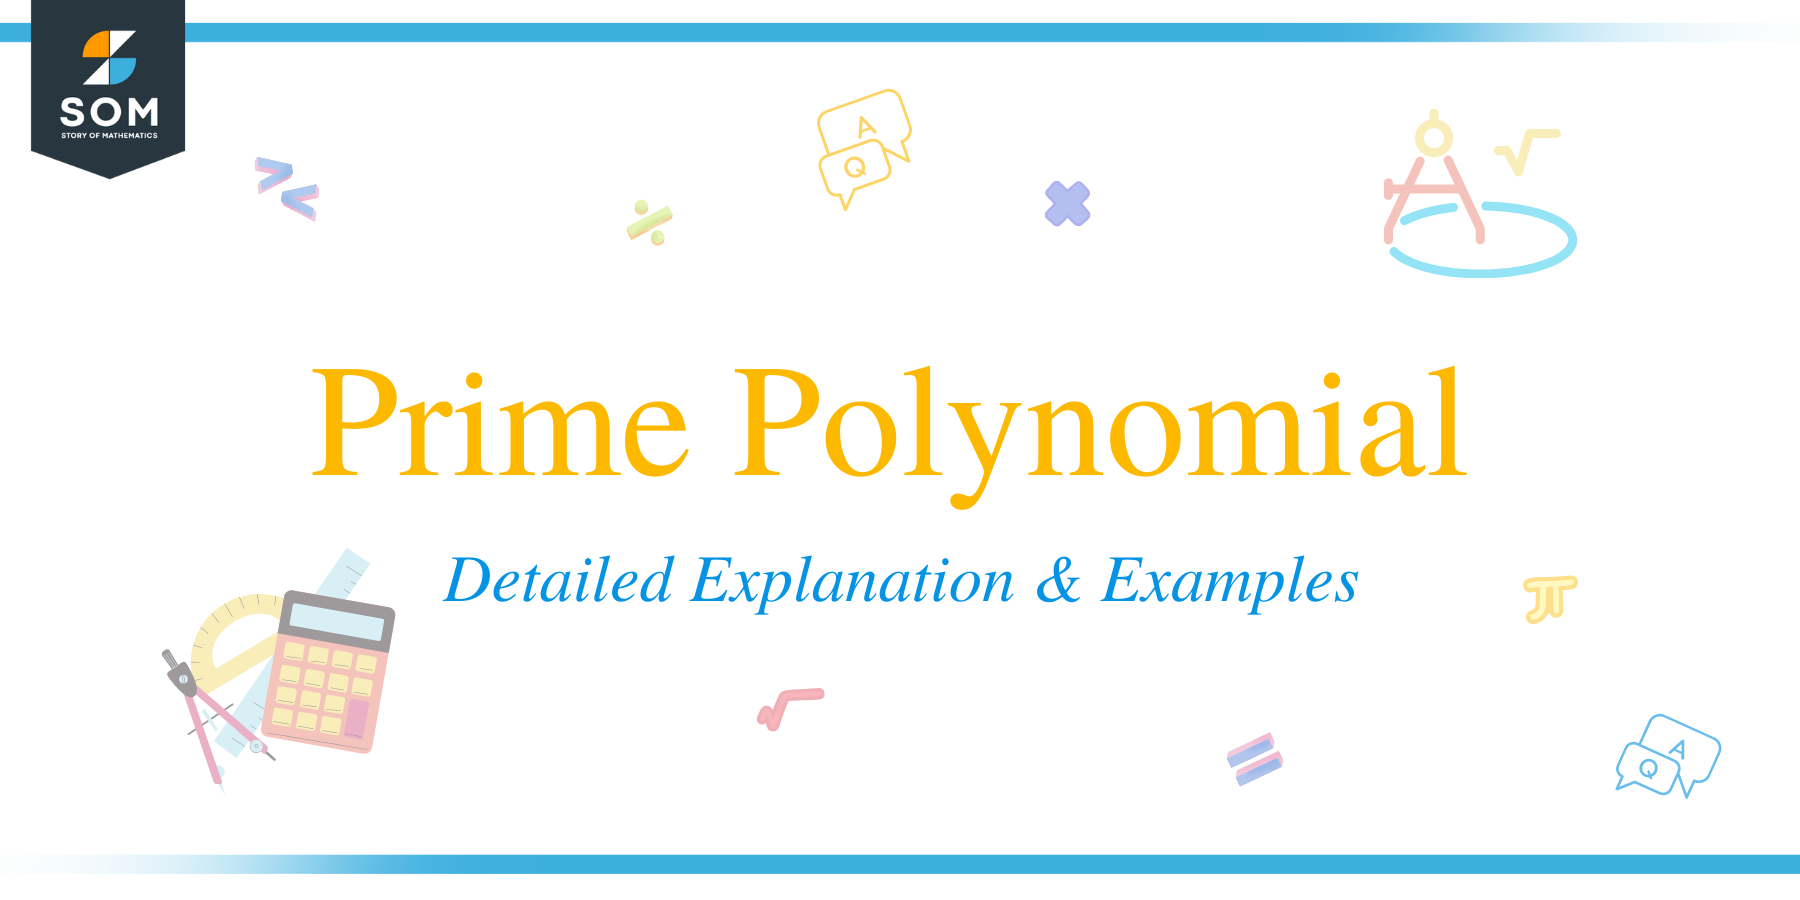 Prime Polynomial